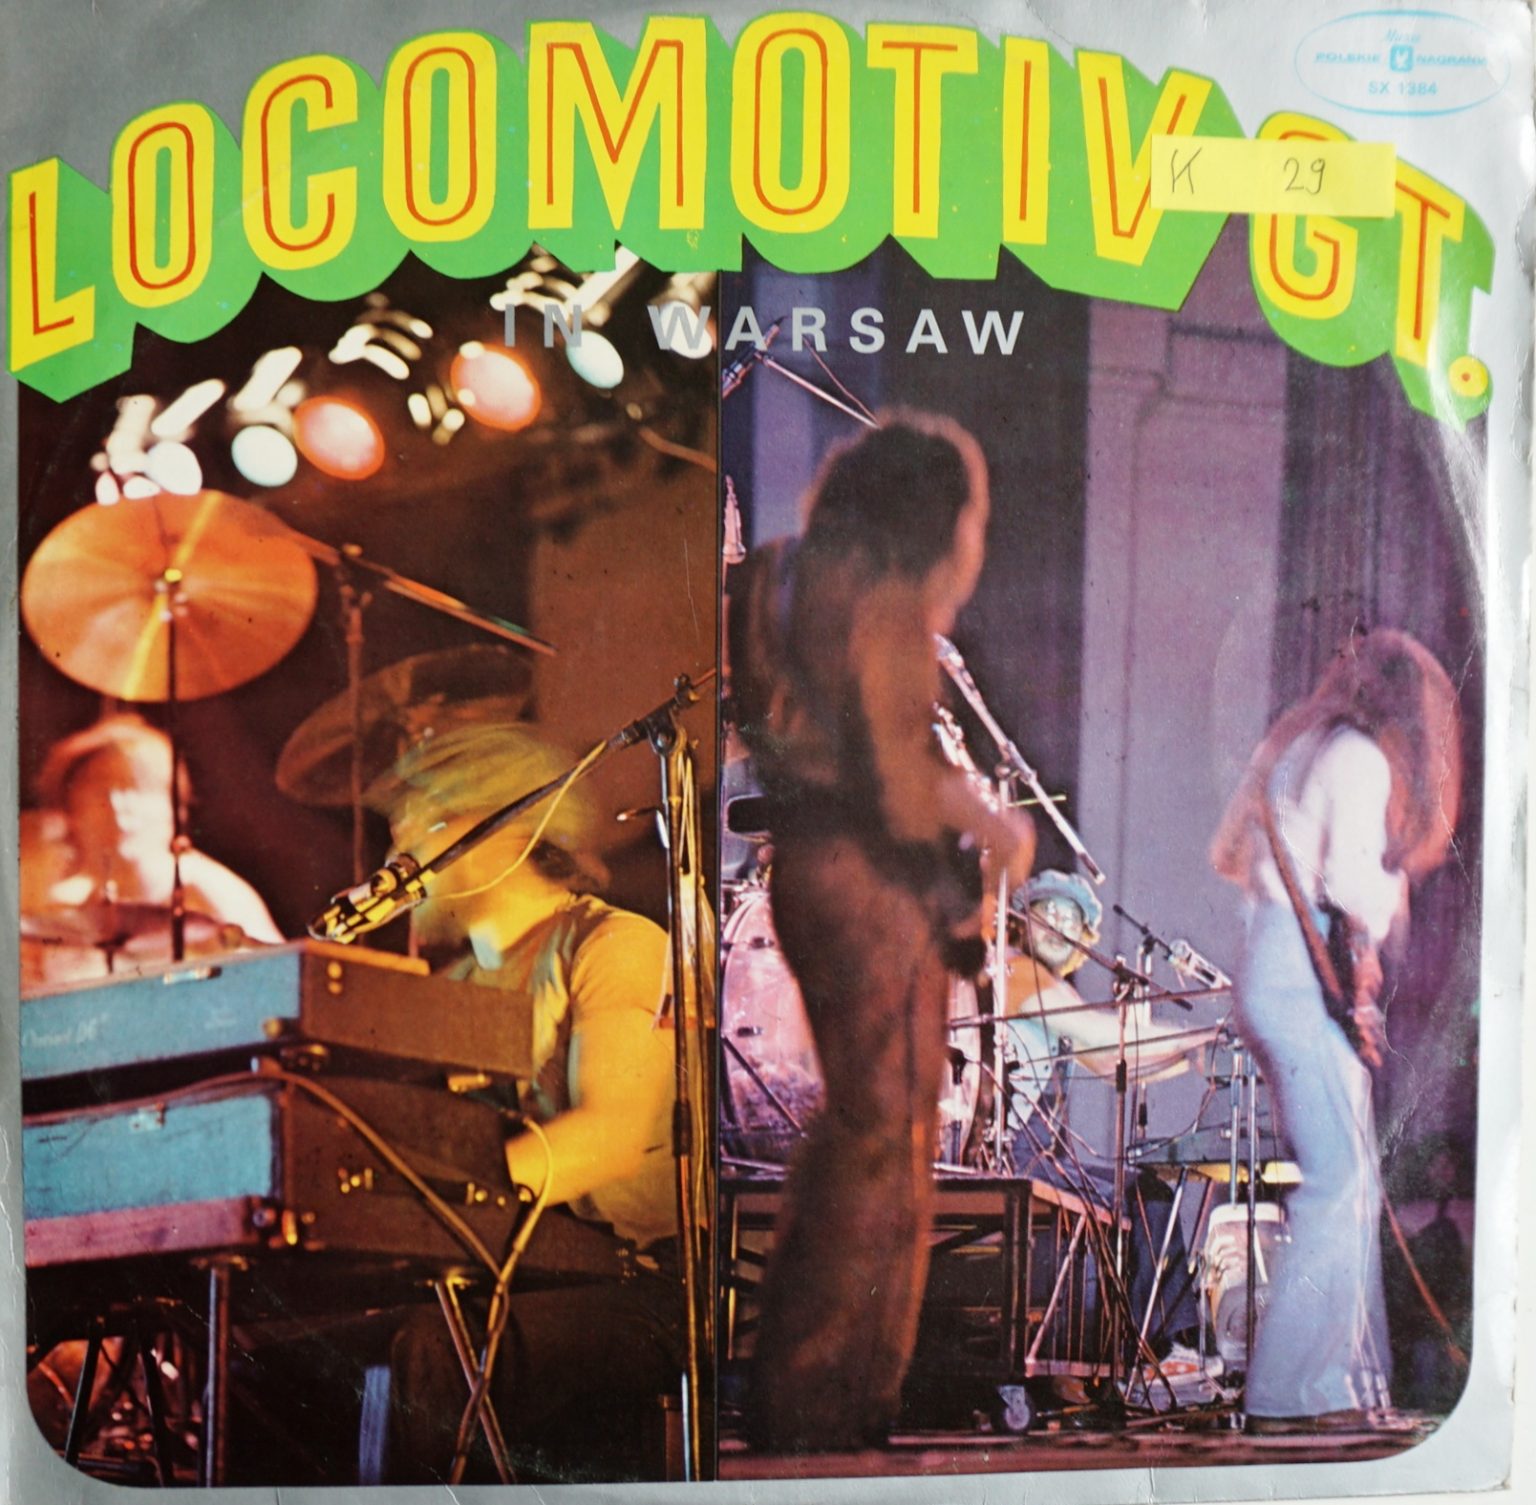 Locomotiv GT – In Warsaw [Vinyl LP] (VG/VG)